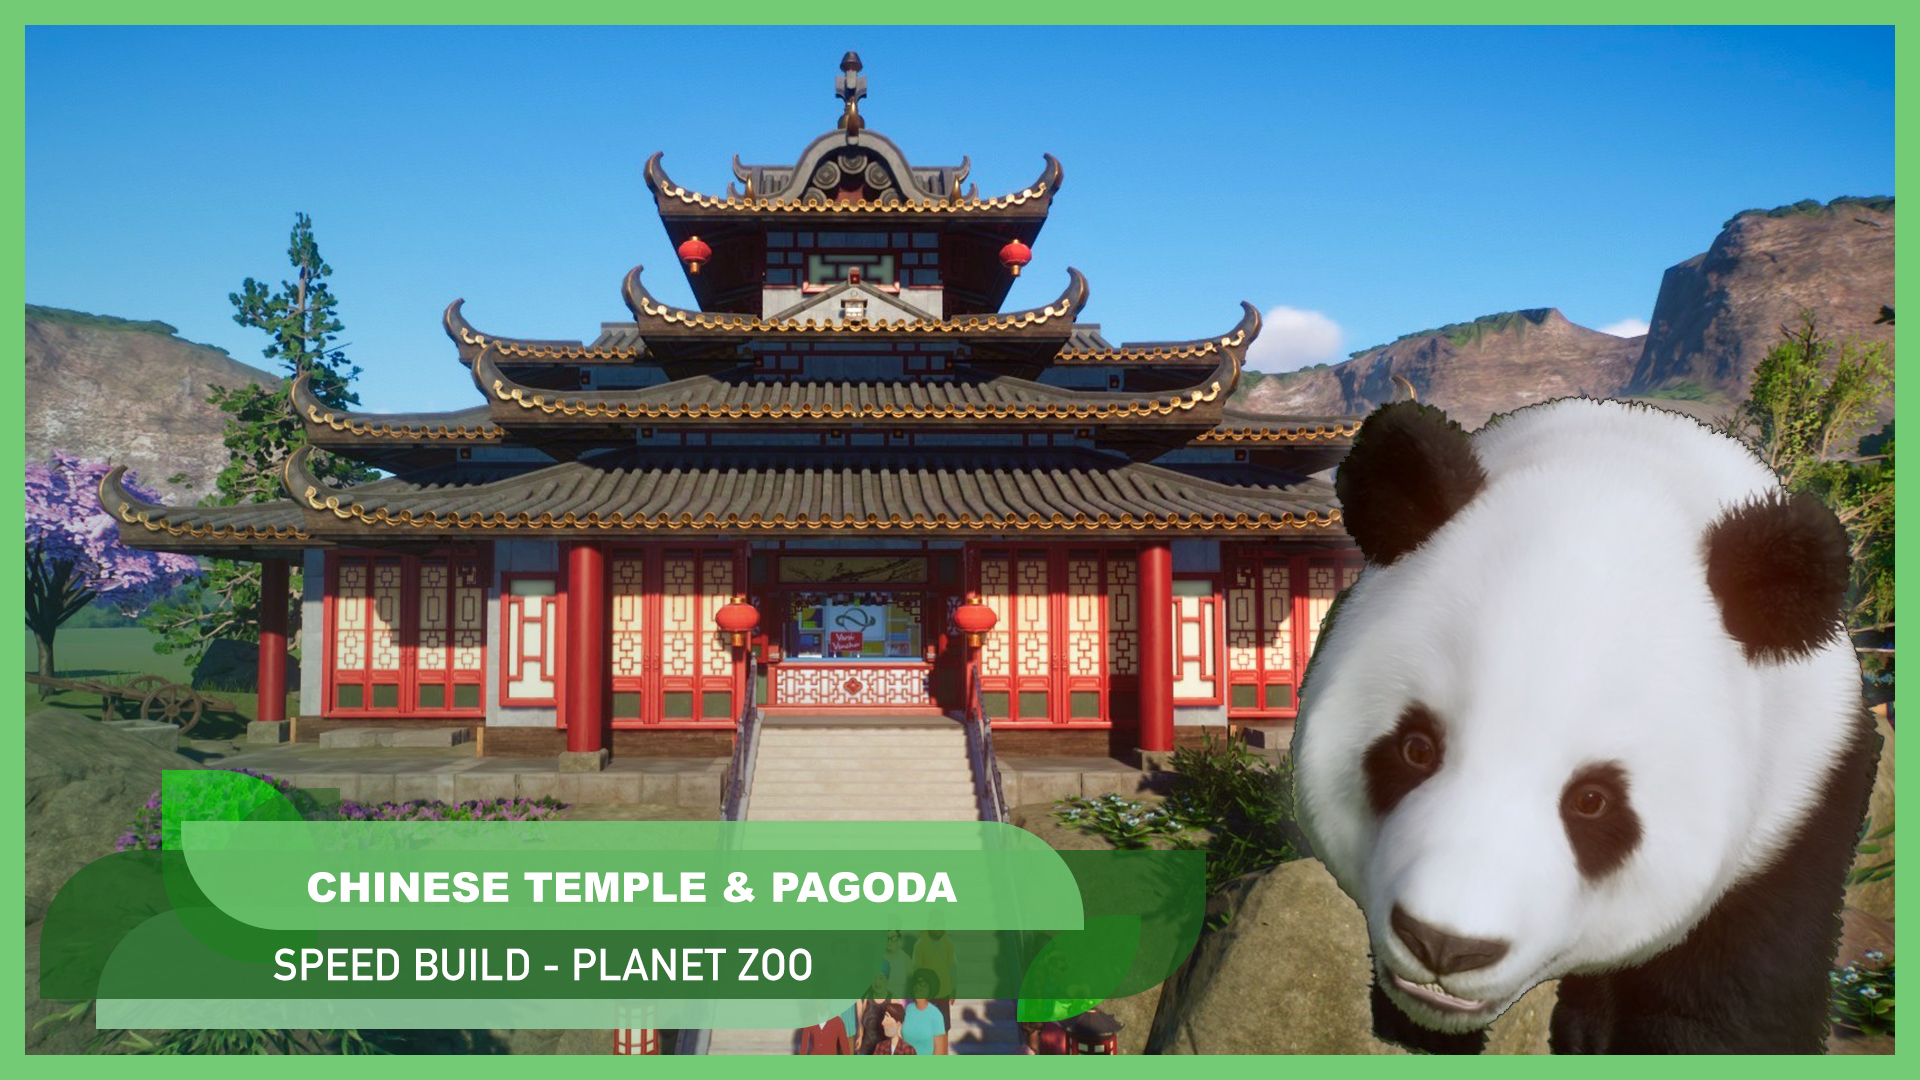 The Giant Panda Habitat Speed Build Pixelwess89